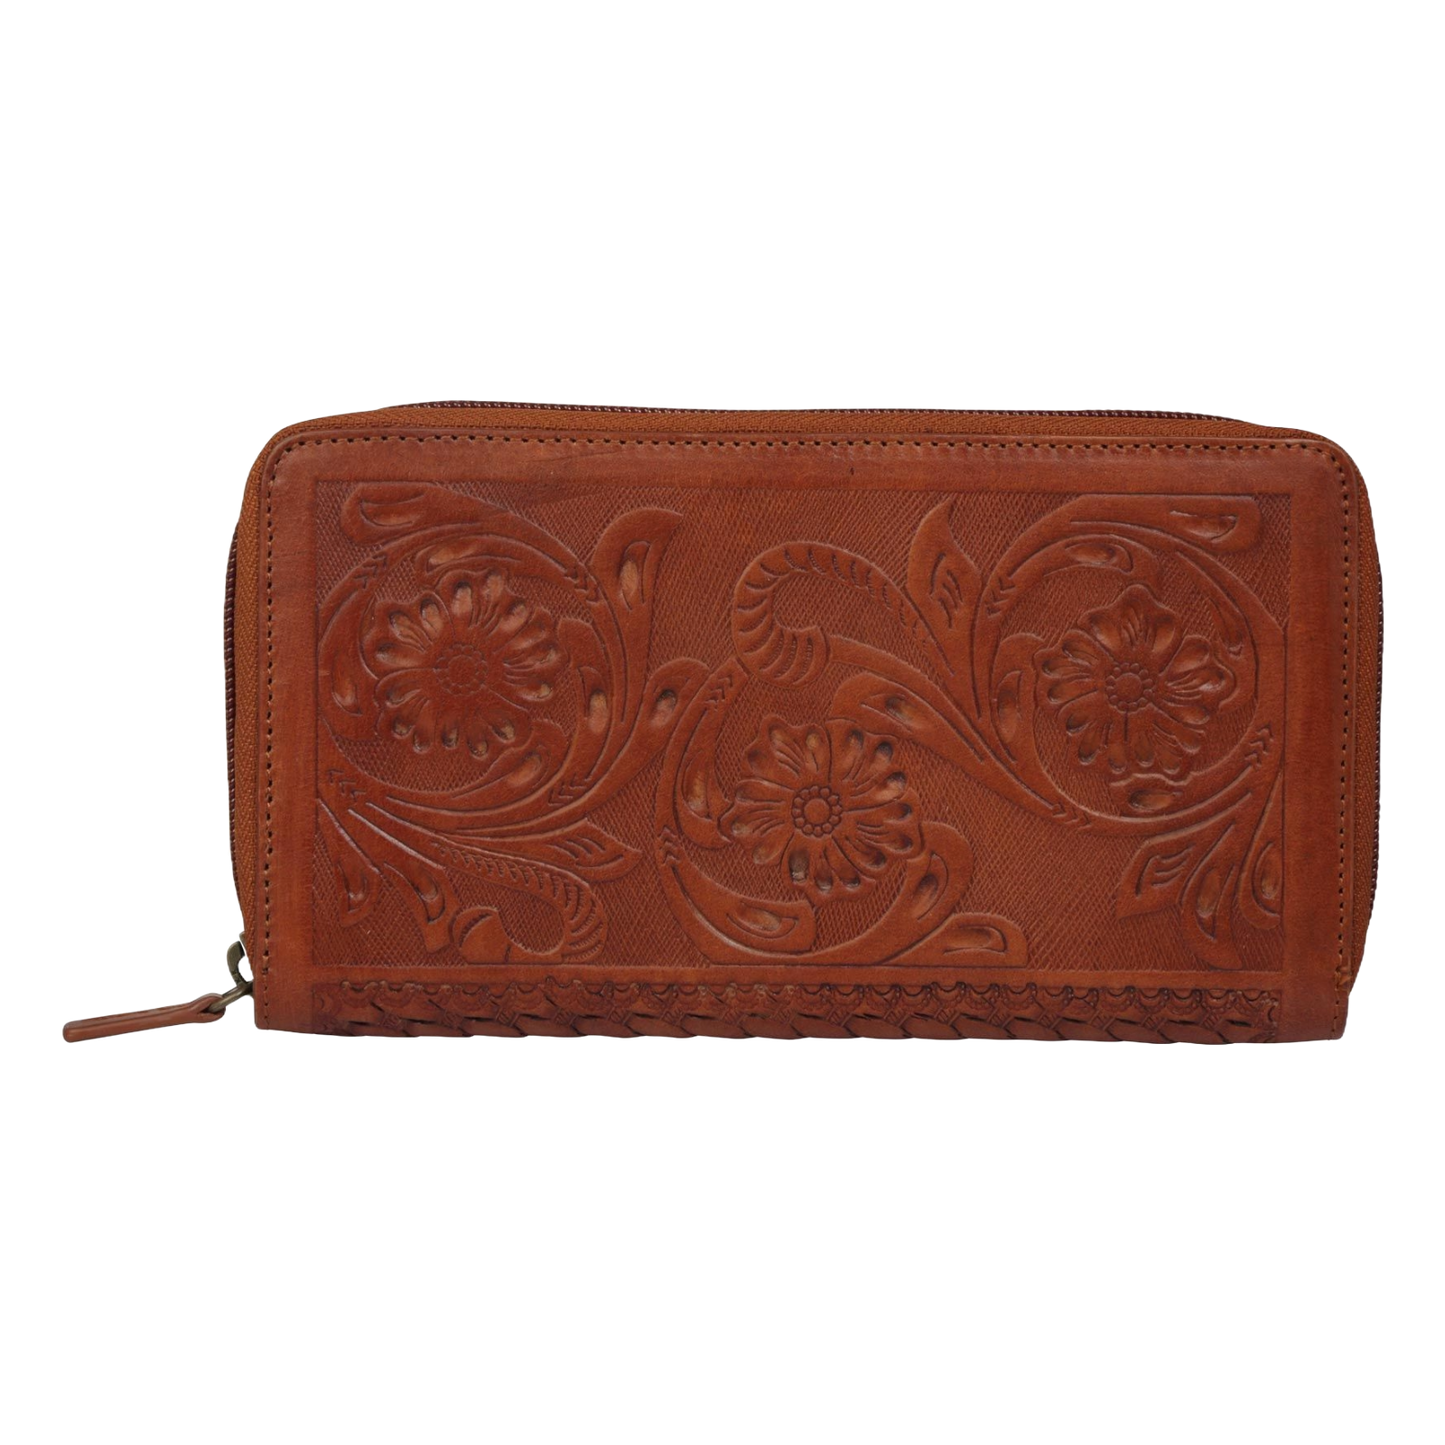 Myra Bag Ladies Rogue Floral Embossed leather Wallet S-3865